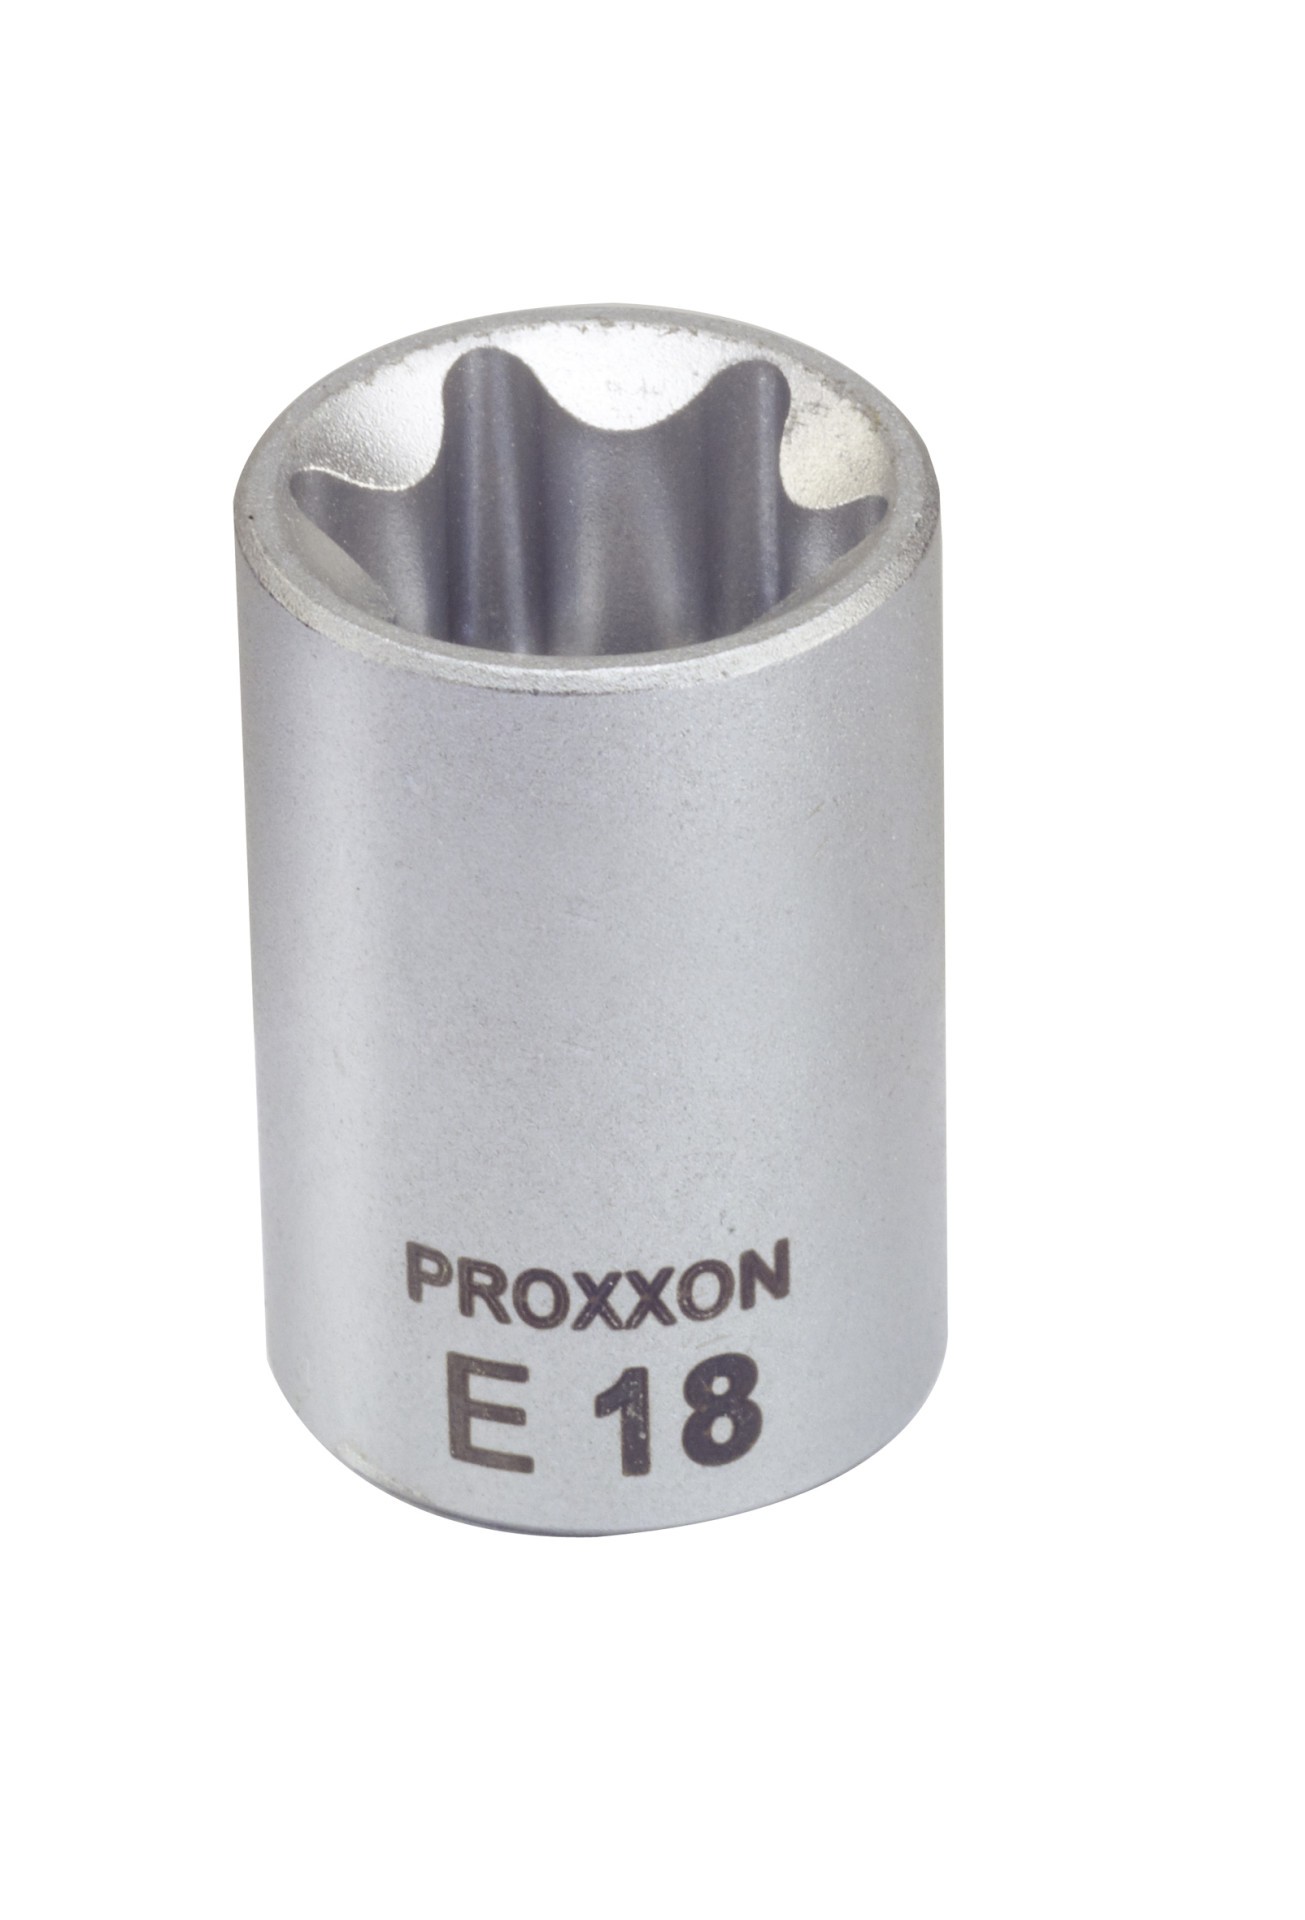 PROXXON [PXX] 3/8" Außentorx-Einsatz E 18 (23624)